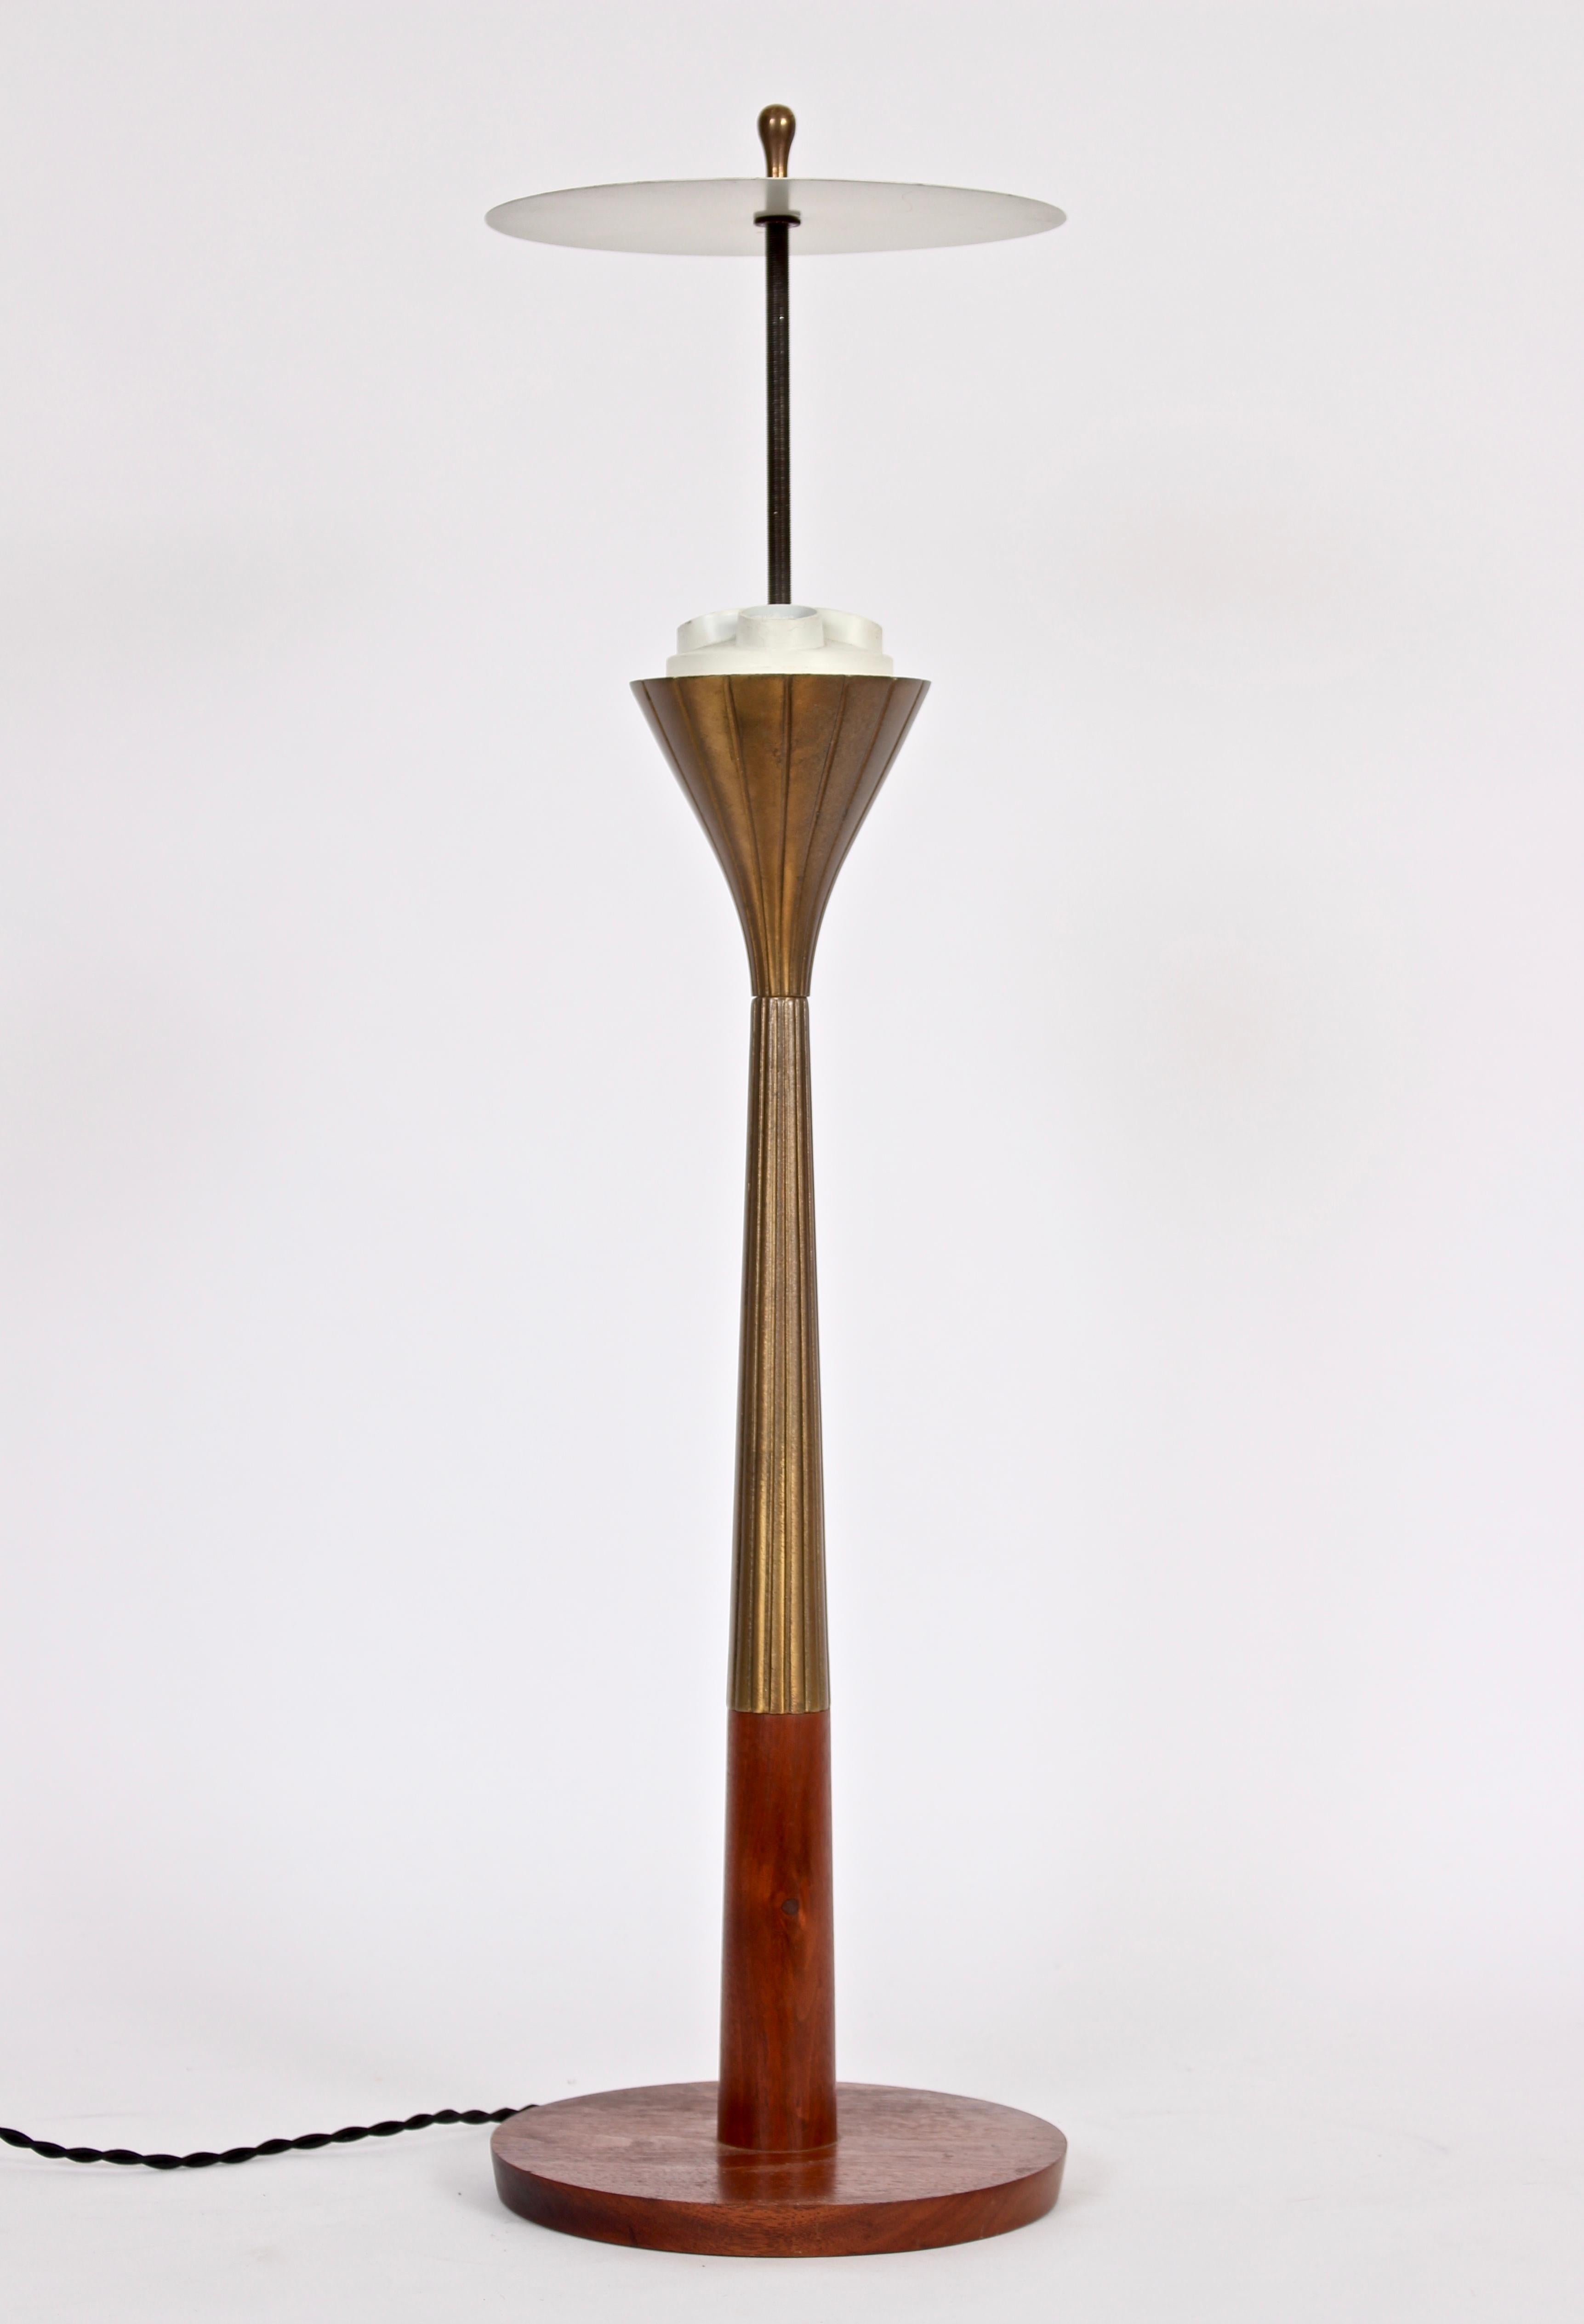 American Tall Gerald Thurston for Lightolier Radiating Brass & Walnut Table Lamp For Sale